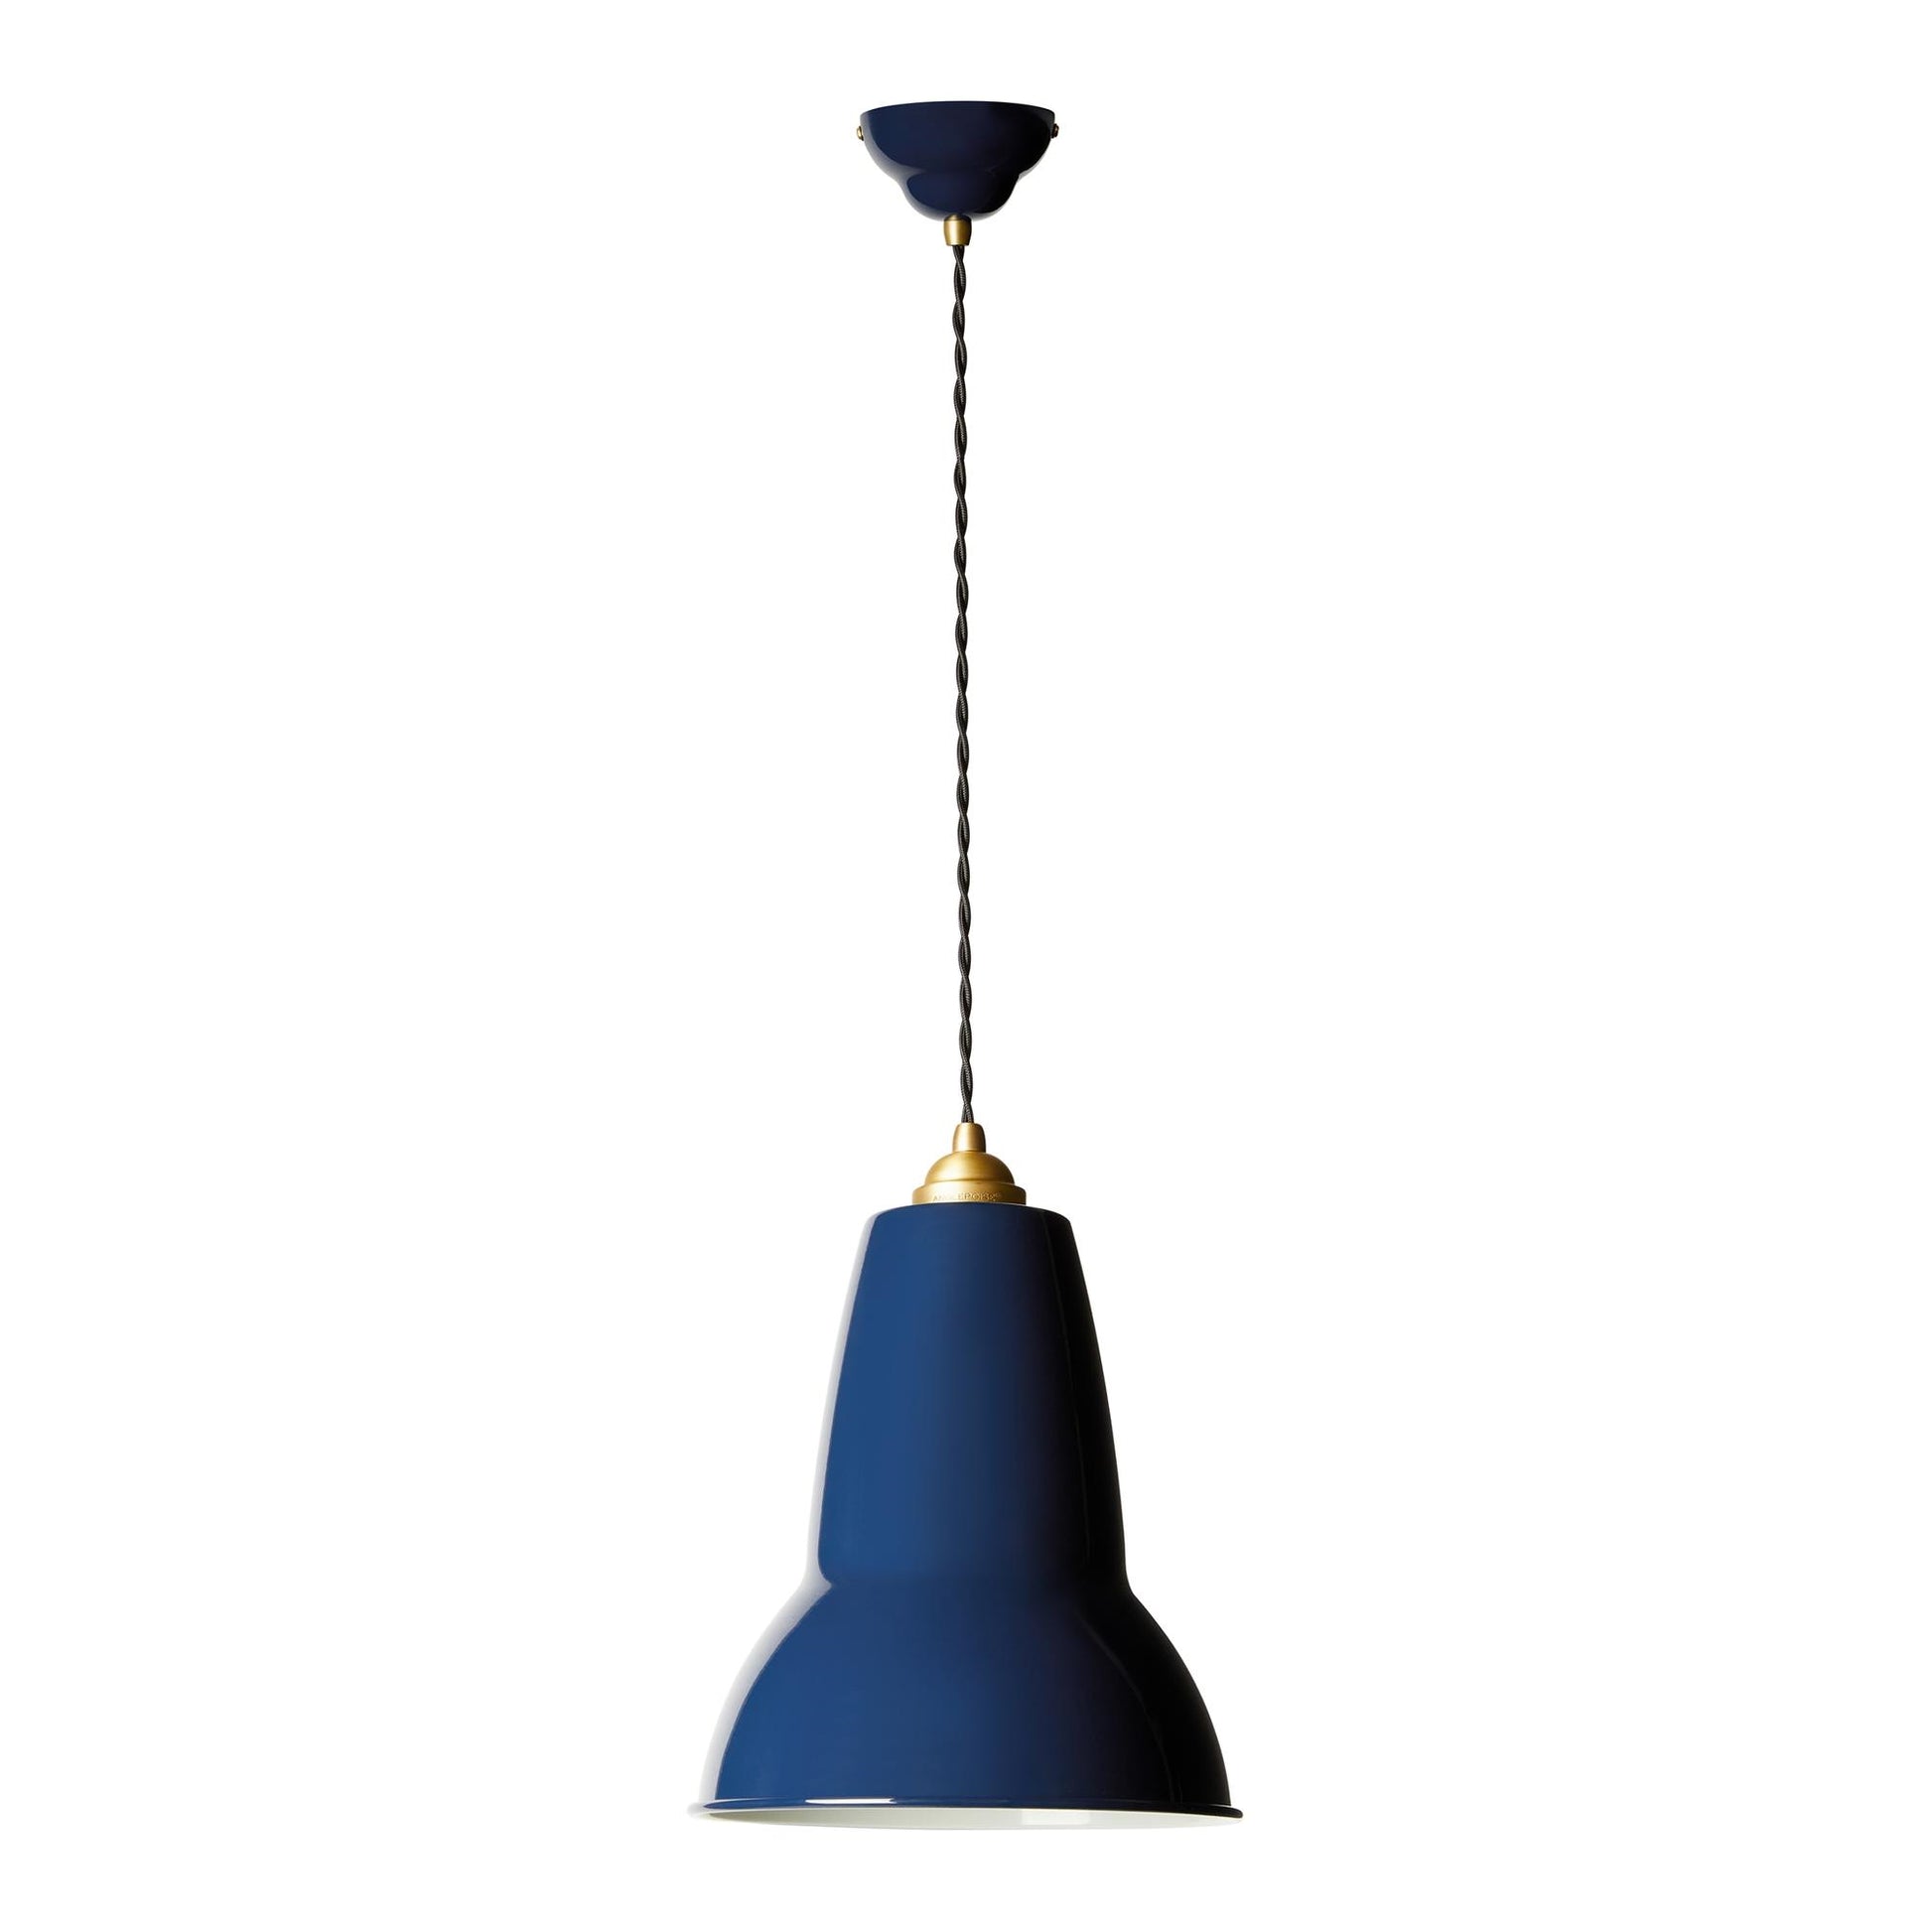 Original 1227 Brass Midi Pendant Lamp by Anglepoise #Brass / Blue